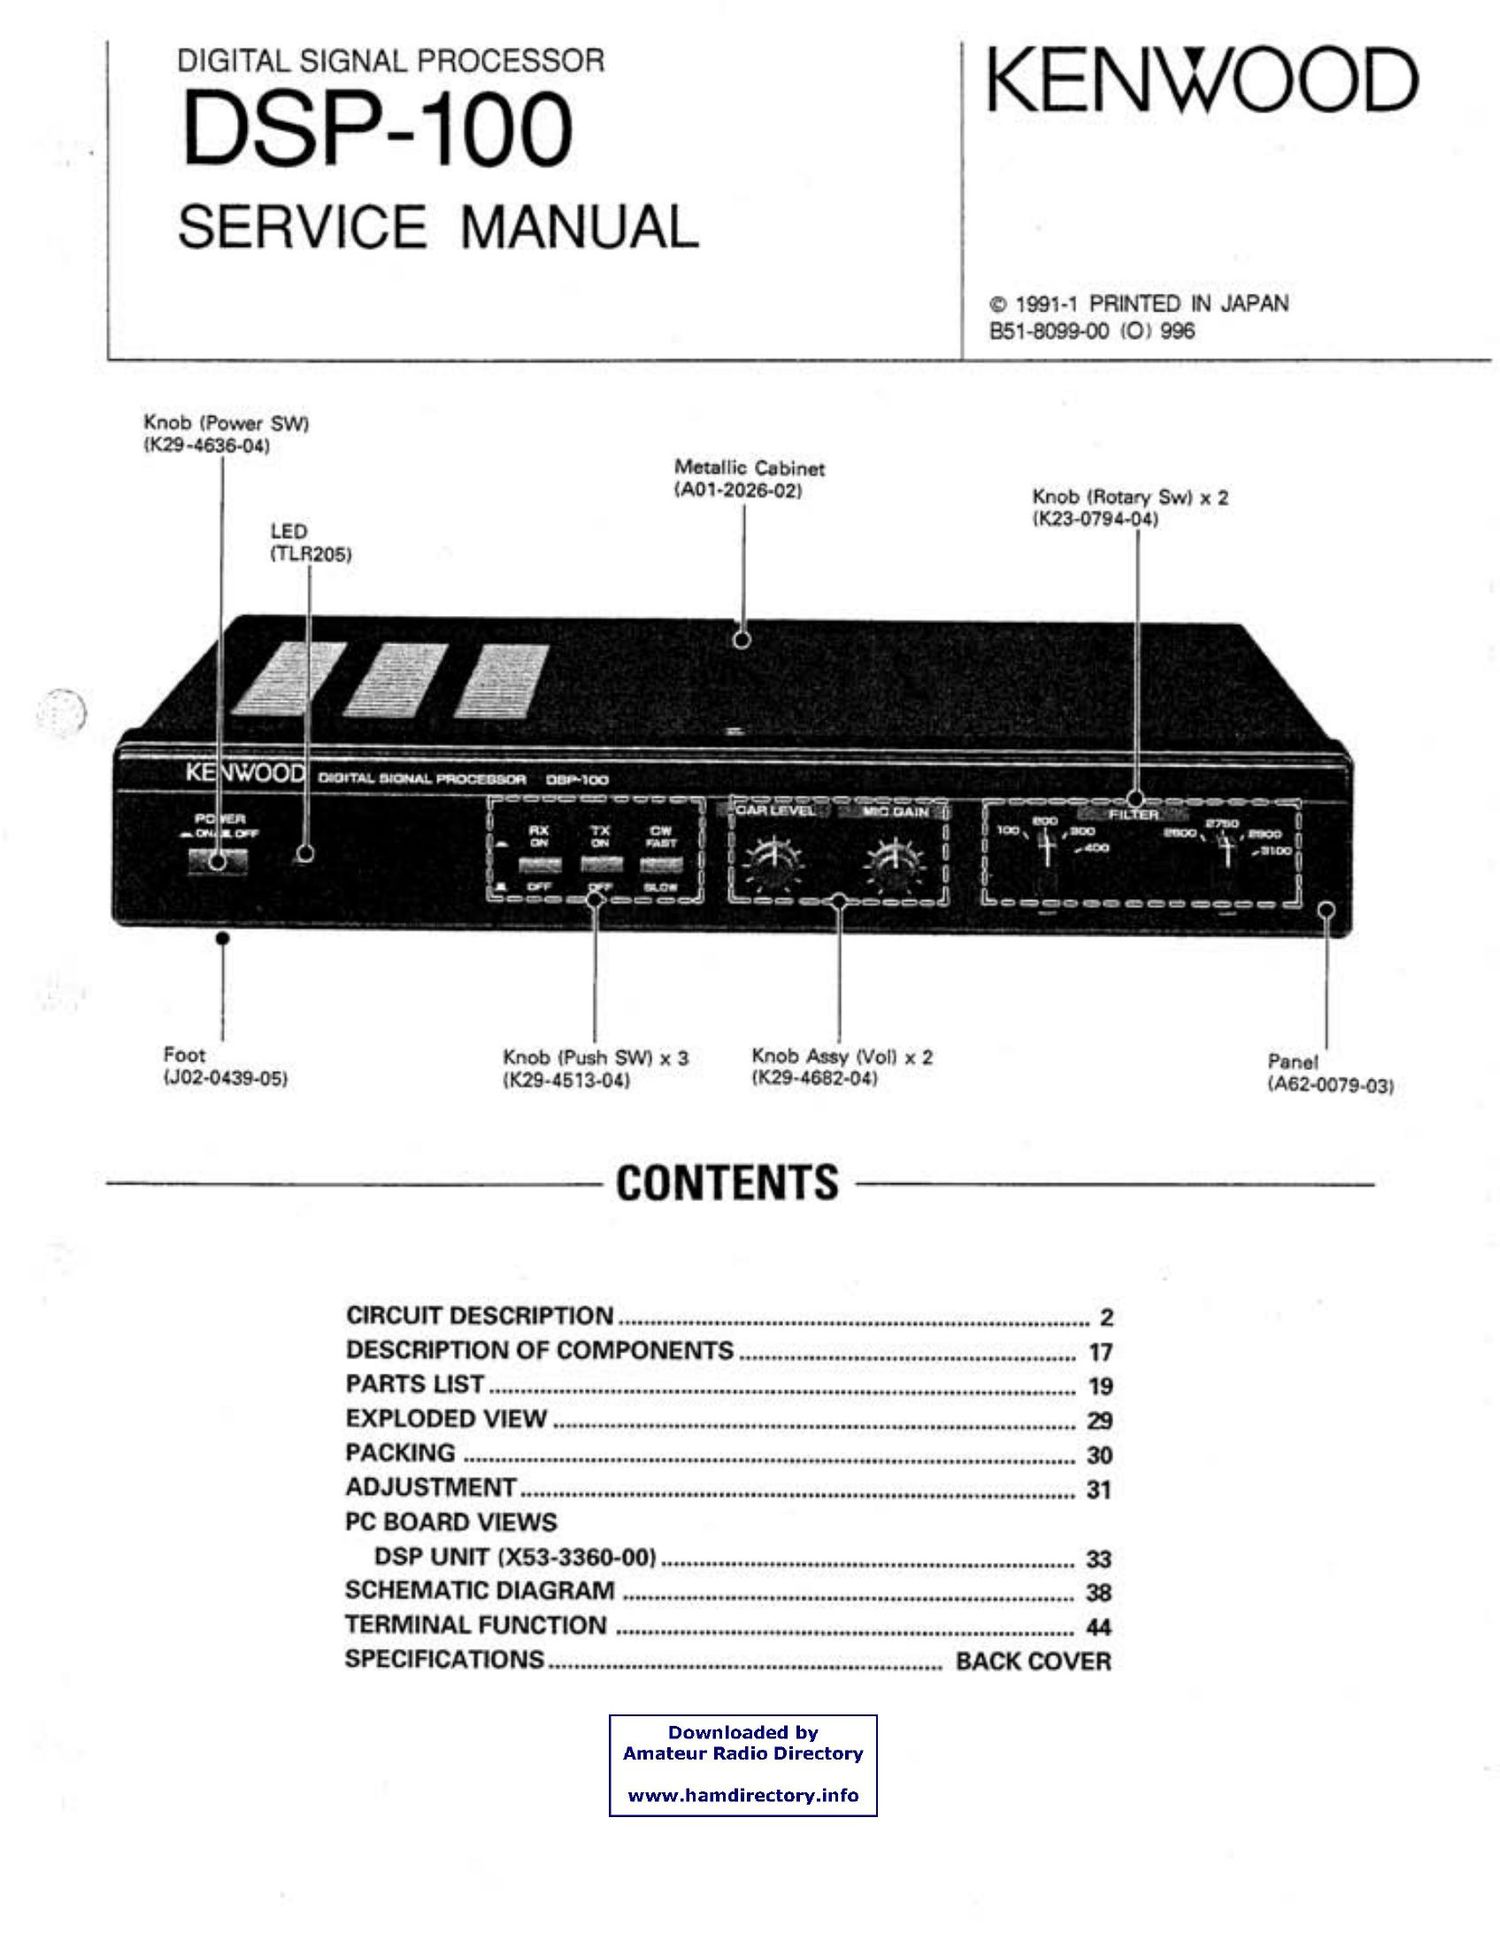 Kenwood DSP 100 Service Manual